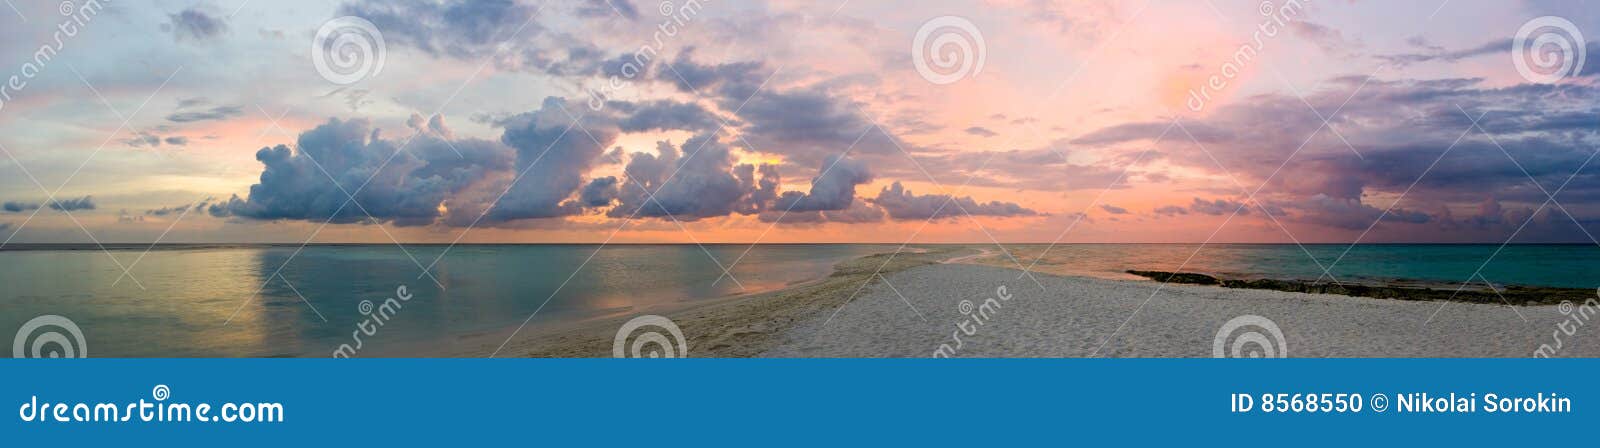 ocean, beach and sunset